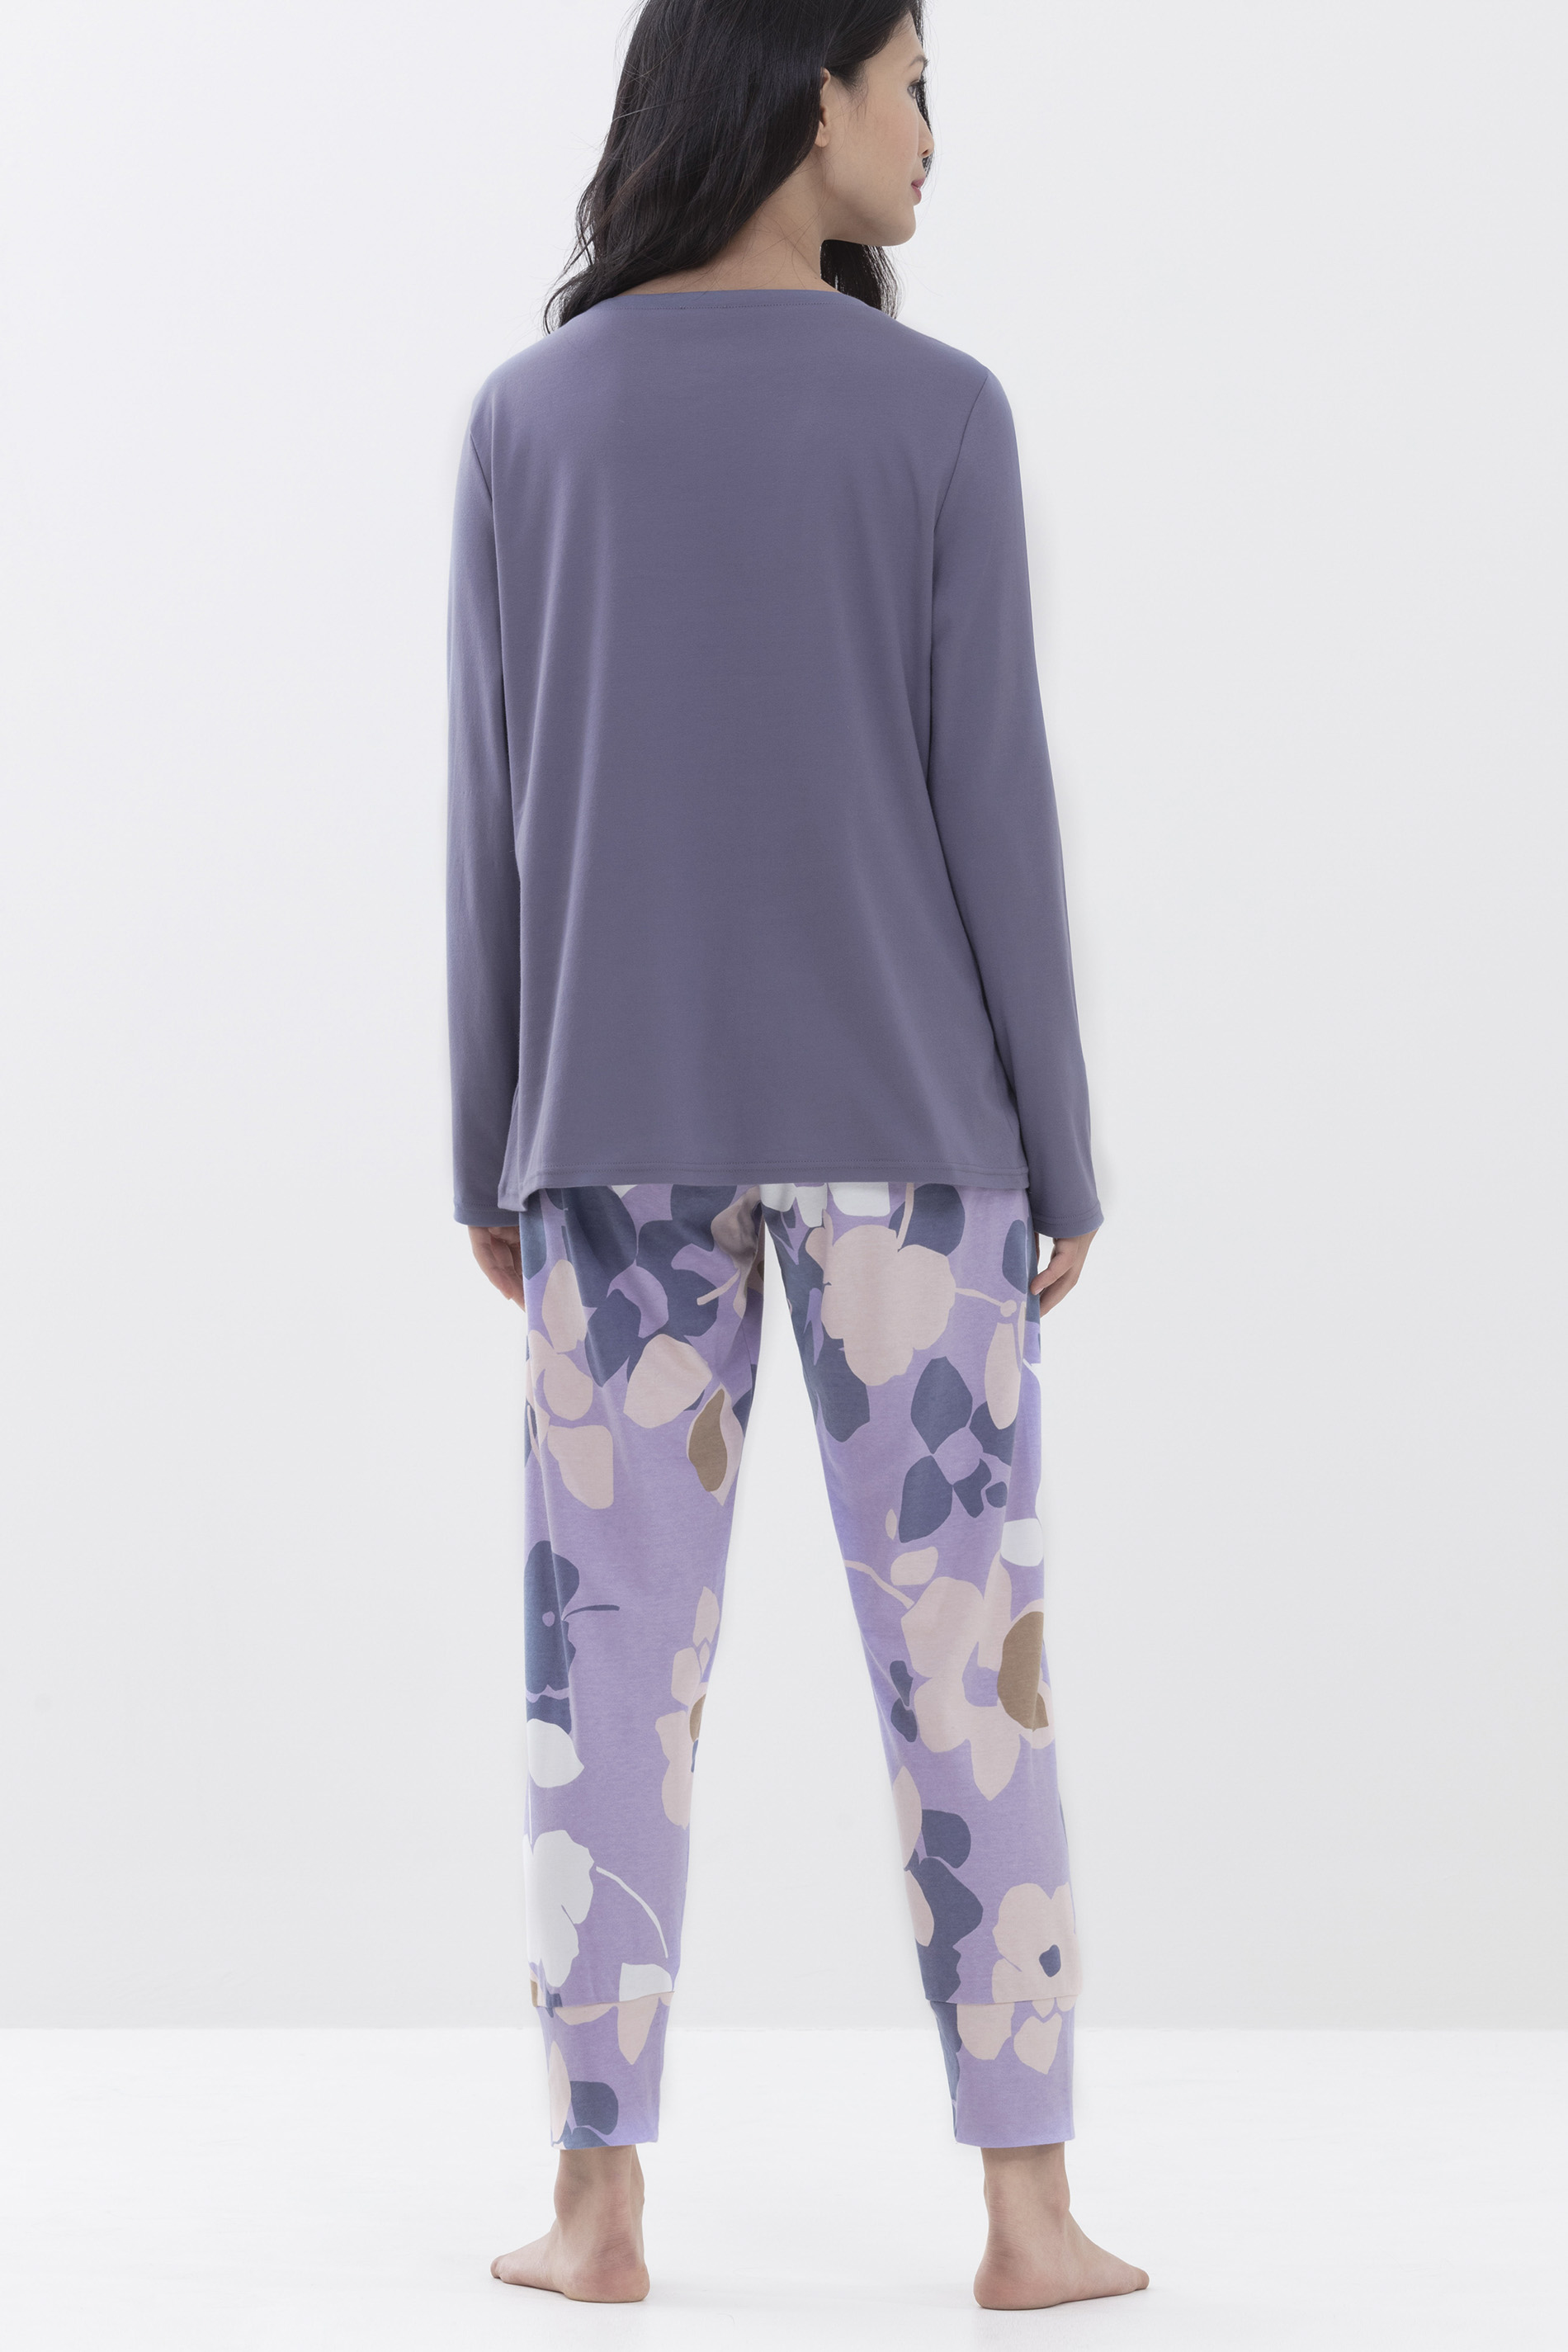 Pyjama Lilac Serie Michelle Rückansicht | mey®